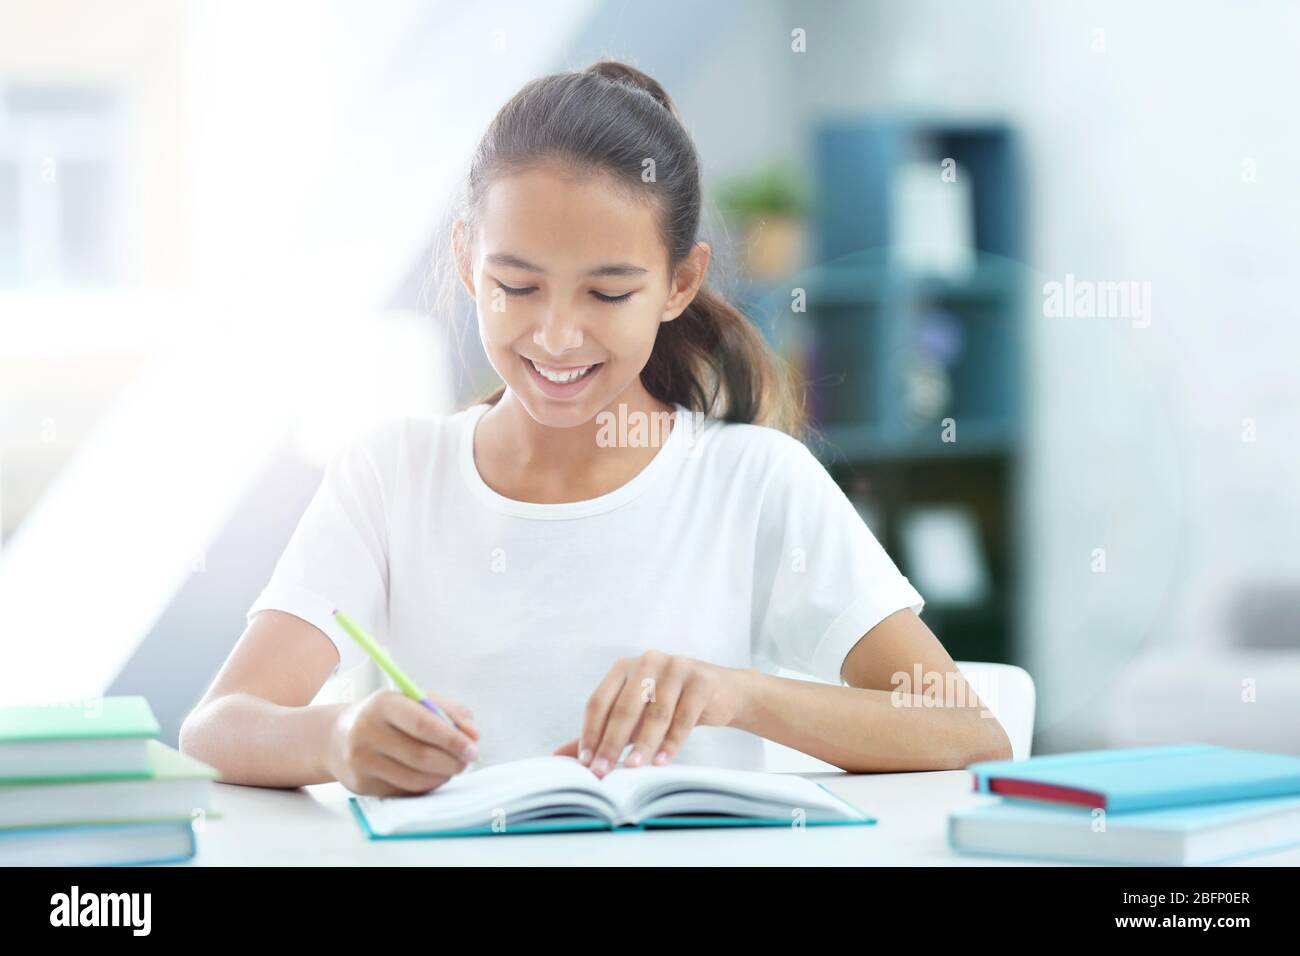 Girl doing homework at table in room Stock Photo